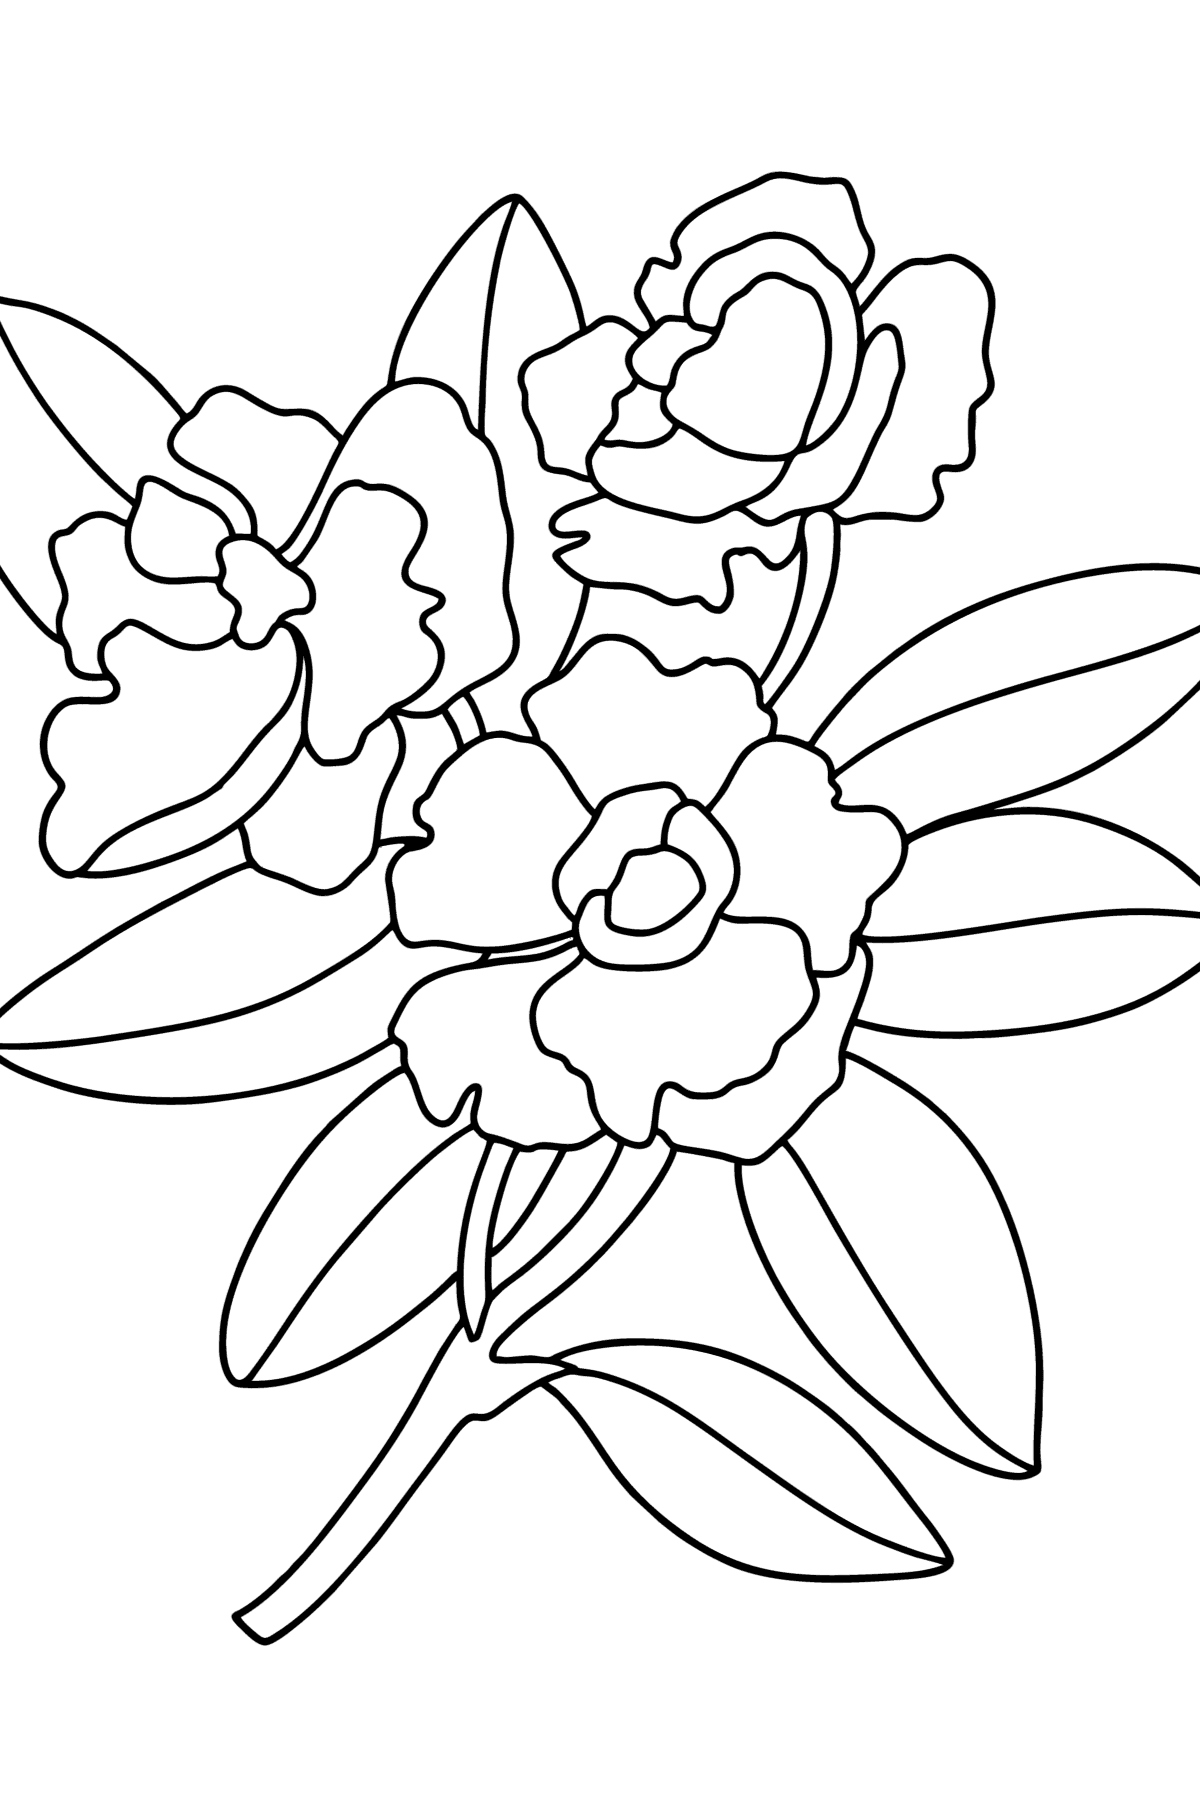 Dibujo de Gardenia para colorear - Dibujos para Colorear para Niños